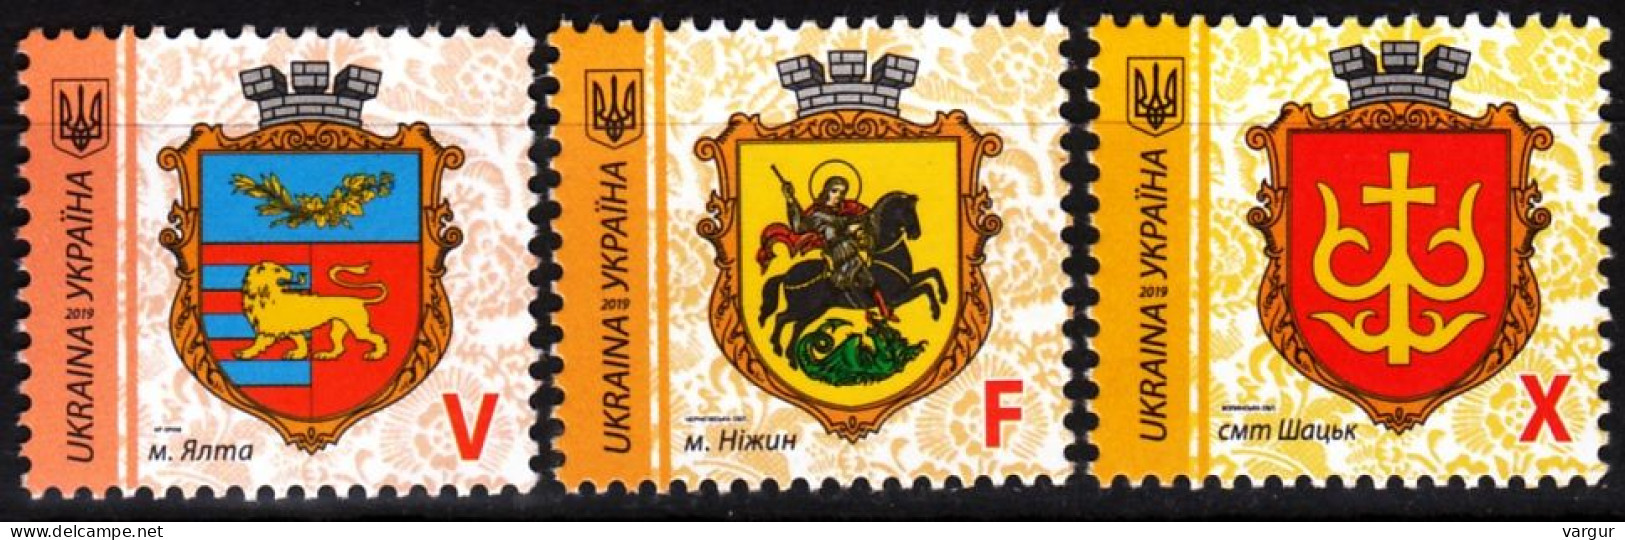 UKRAINE 2019-13 Definitive: Heraldry City Arms, 3v. Re-printing. Issues 1 & 2, MNH - Briefmarken